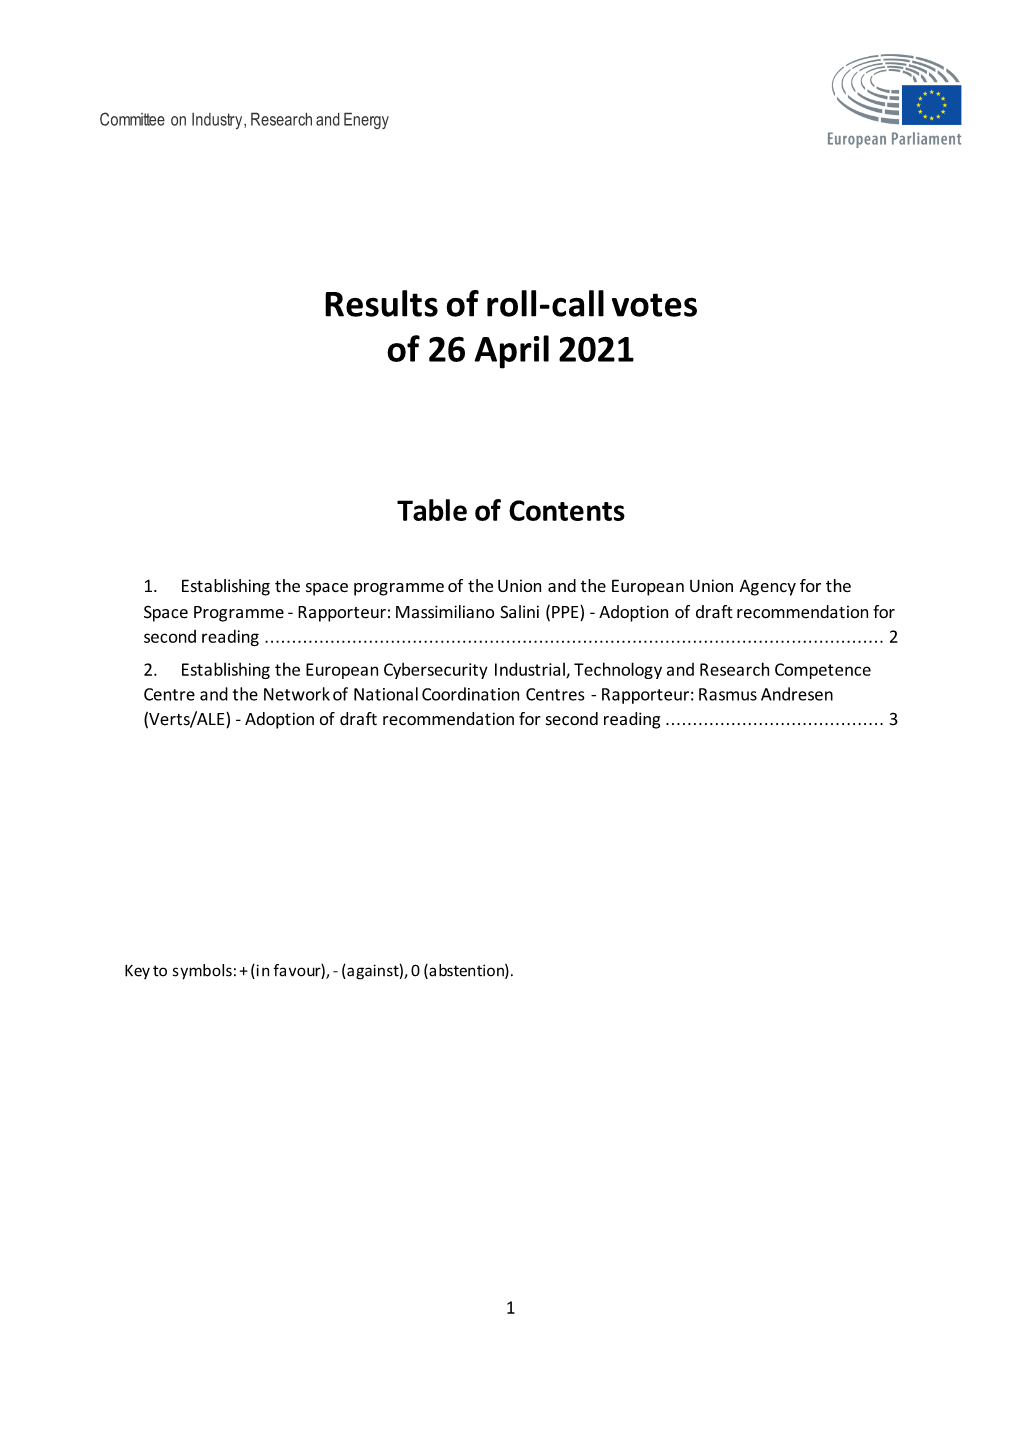 Votes of 26 April 2021